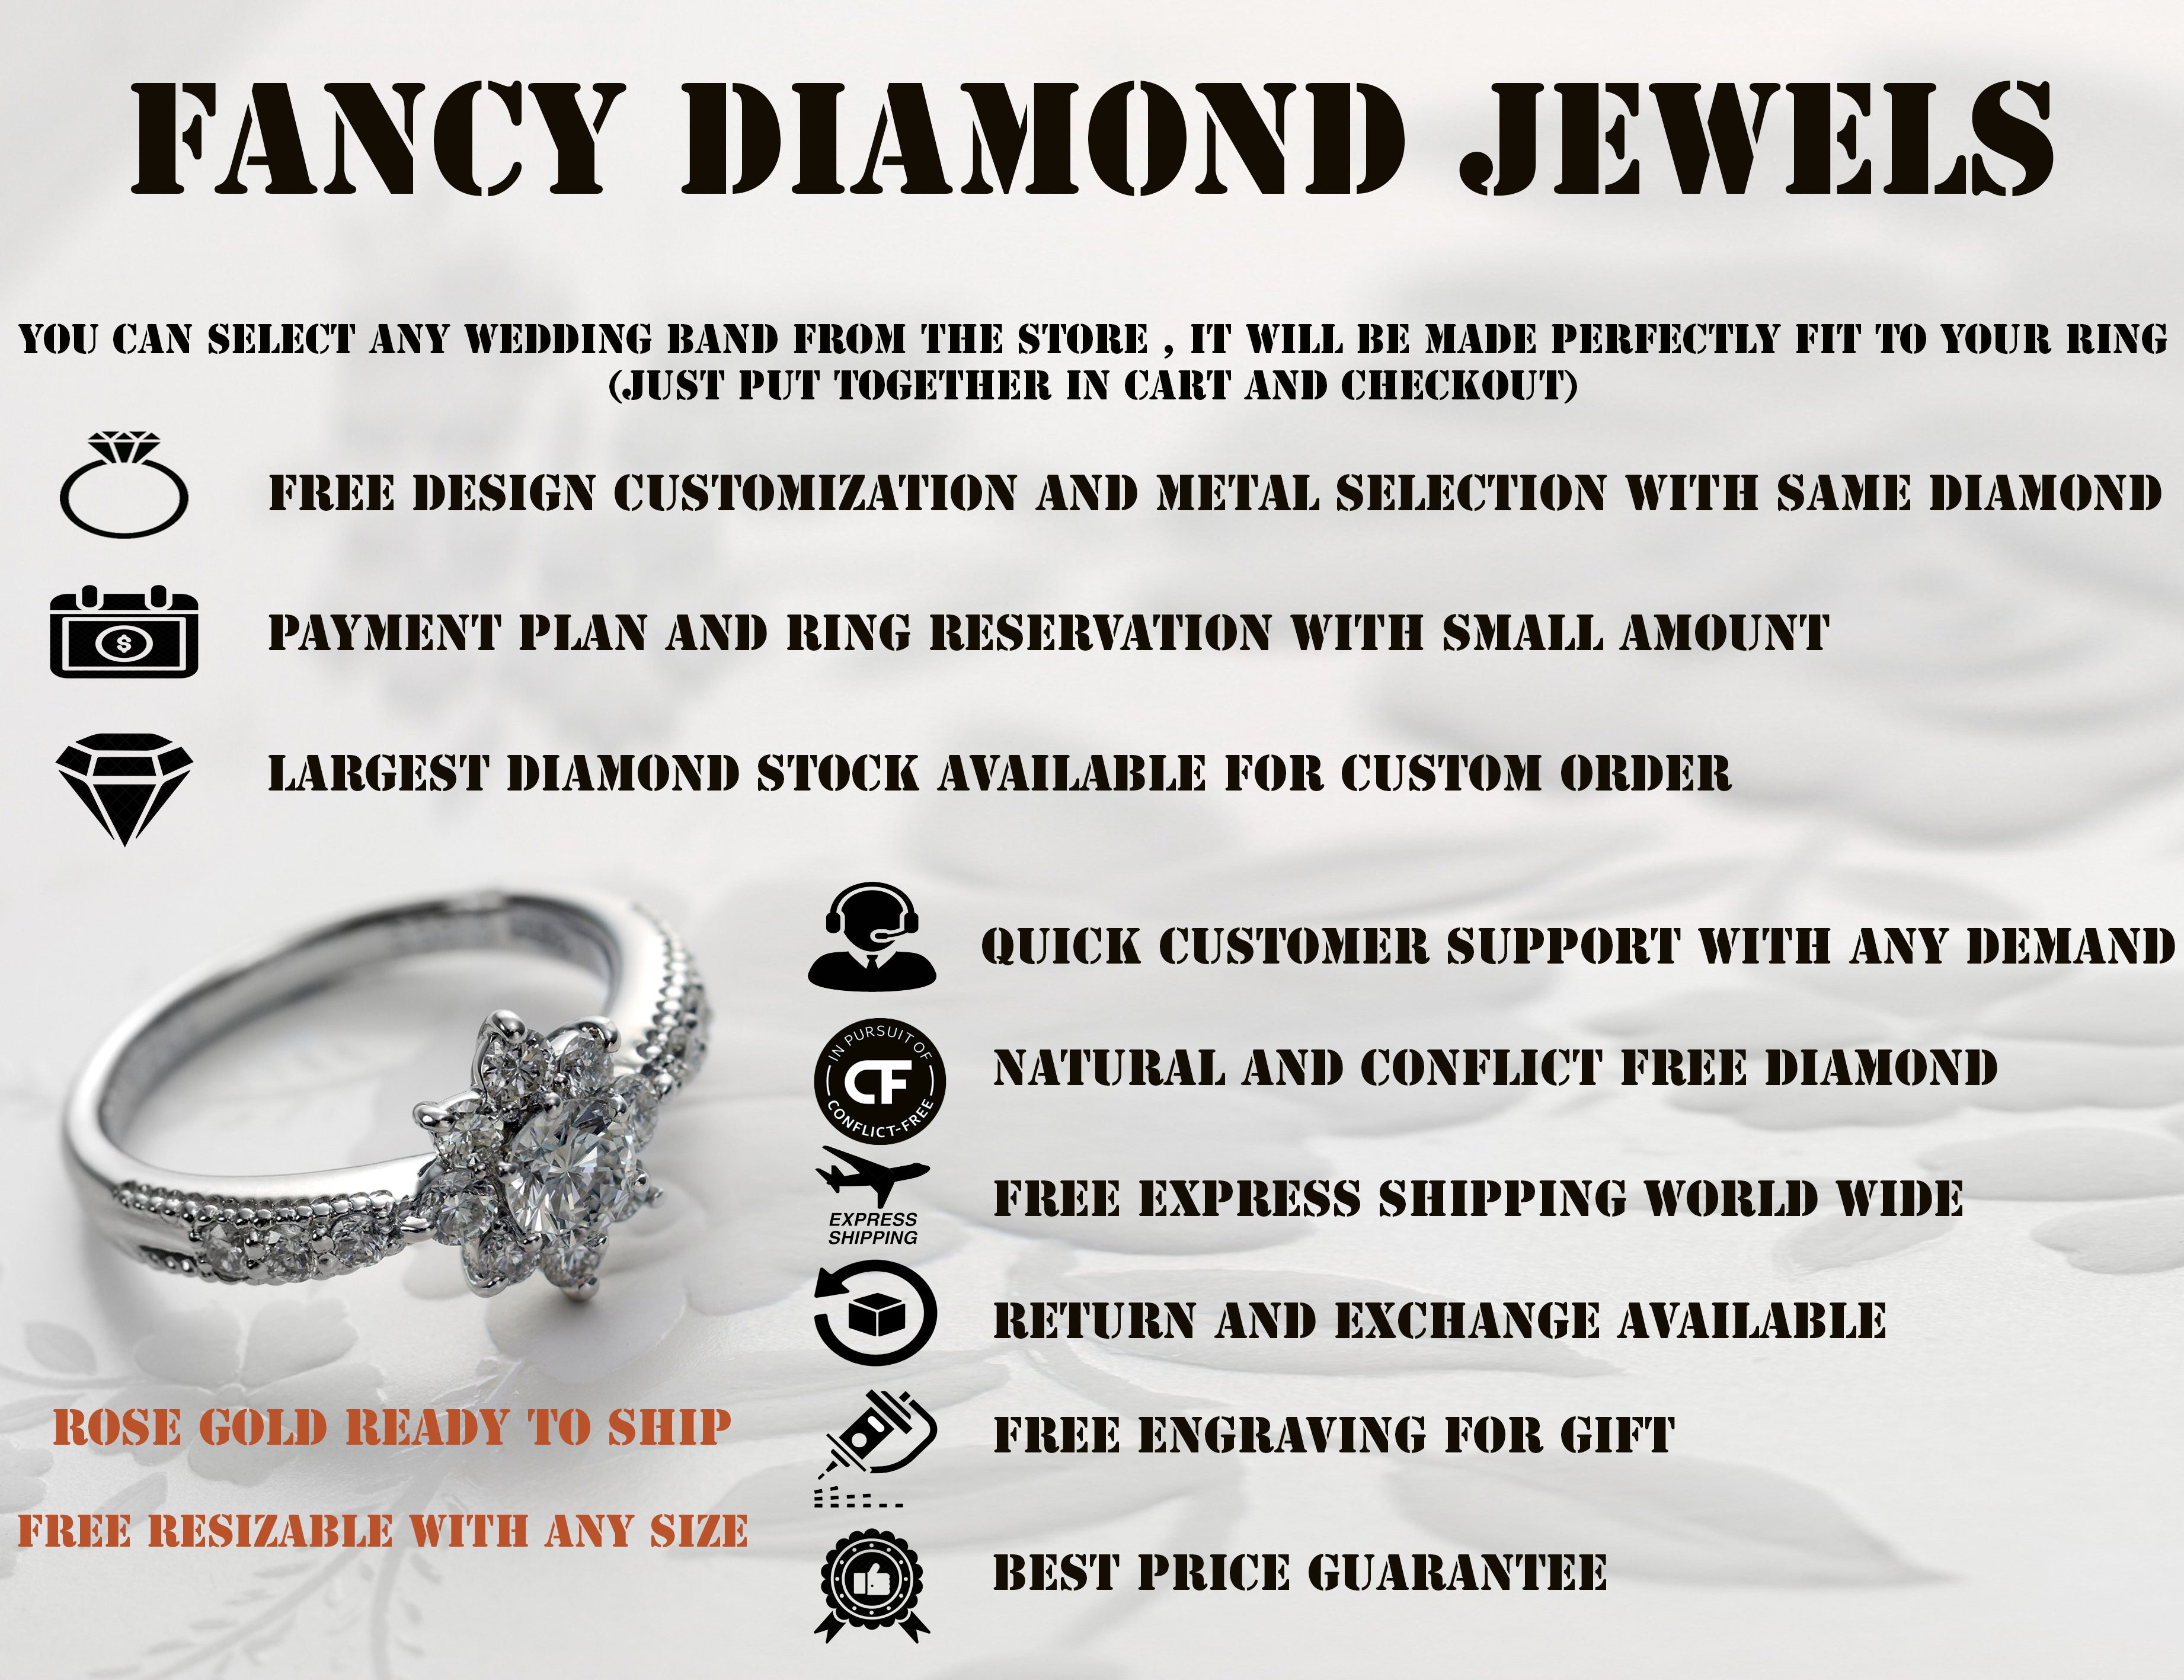 Hexagon Cut Salt And Pepper Diamond Ring 0.70 Ct 5.70 MM Hexagon Cut Diamond Ring 14K Rose Gold Silver Engagement Ring Gift For Her QL9362